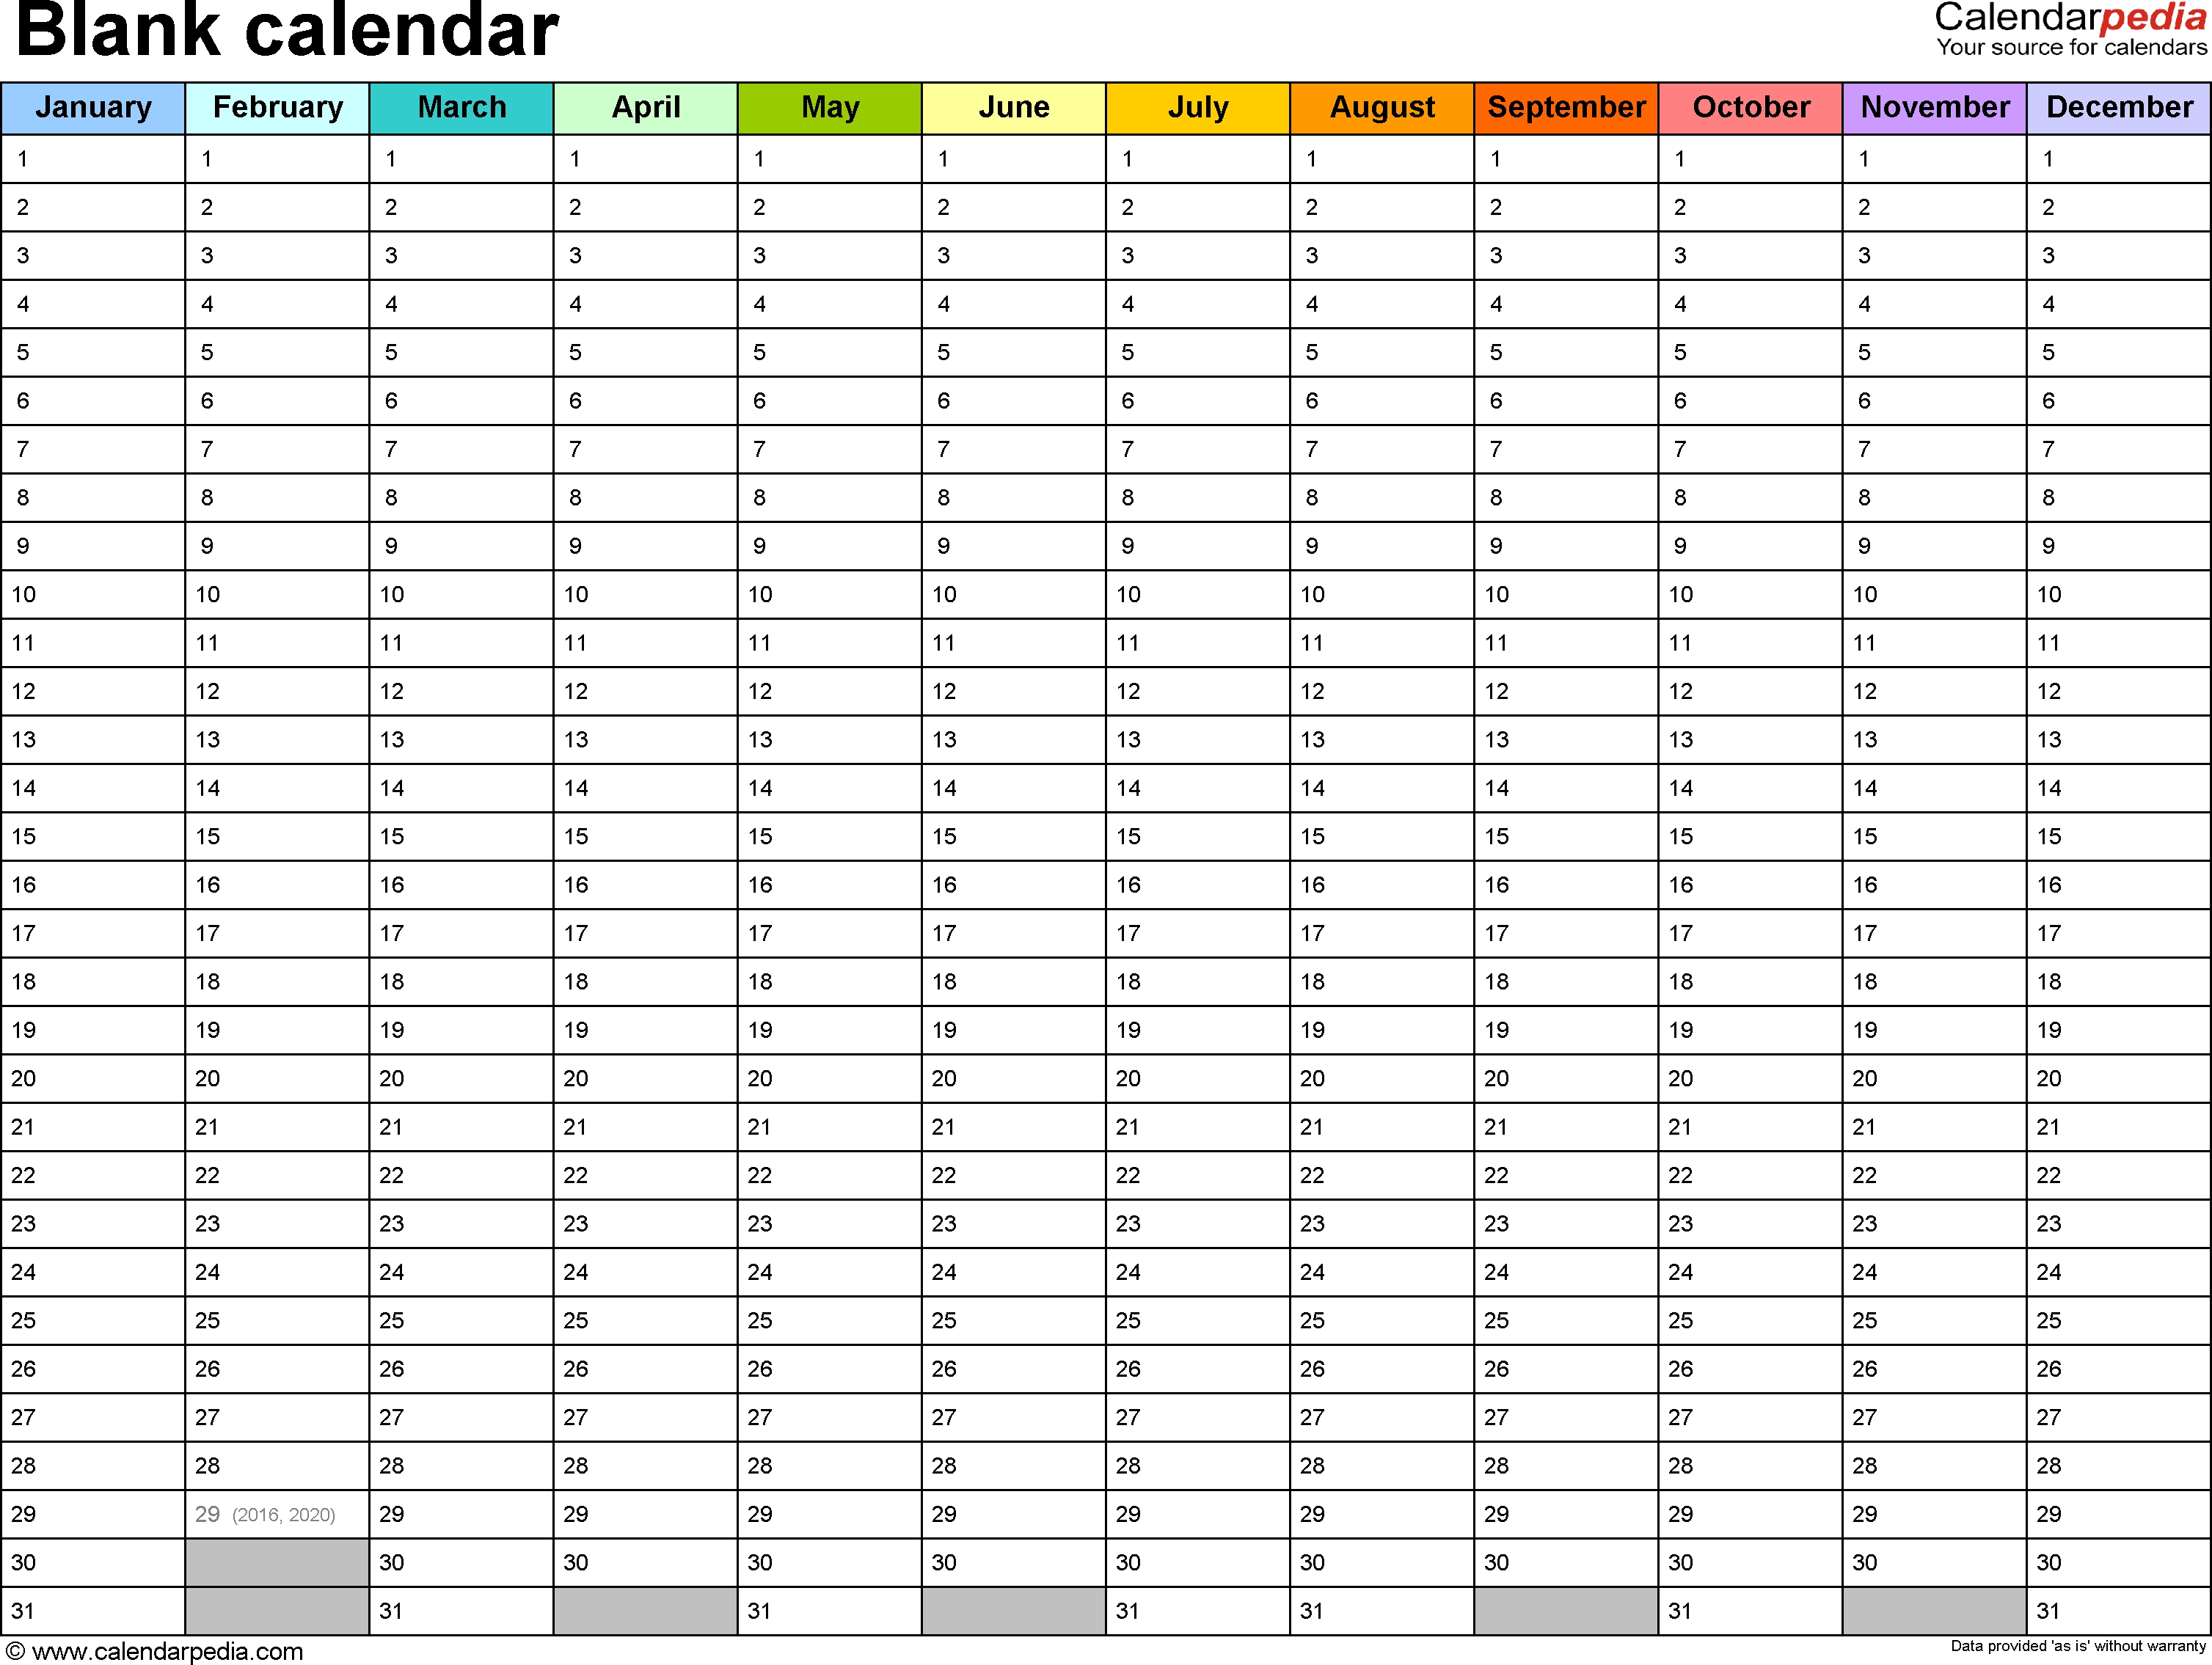 Blank Calendar - 9 Free Printable Microsoft Word Templates for Three Month Single Page Calendar